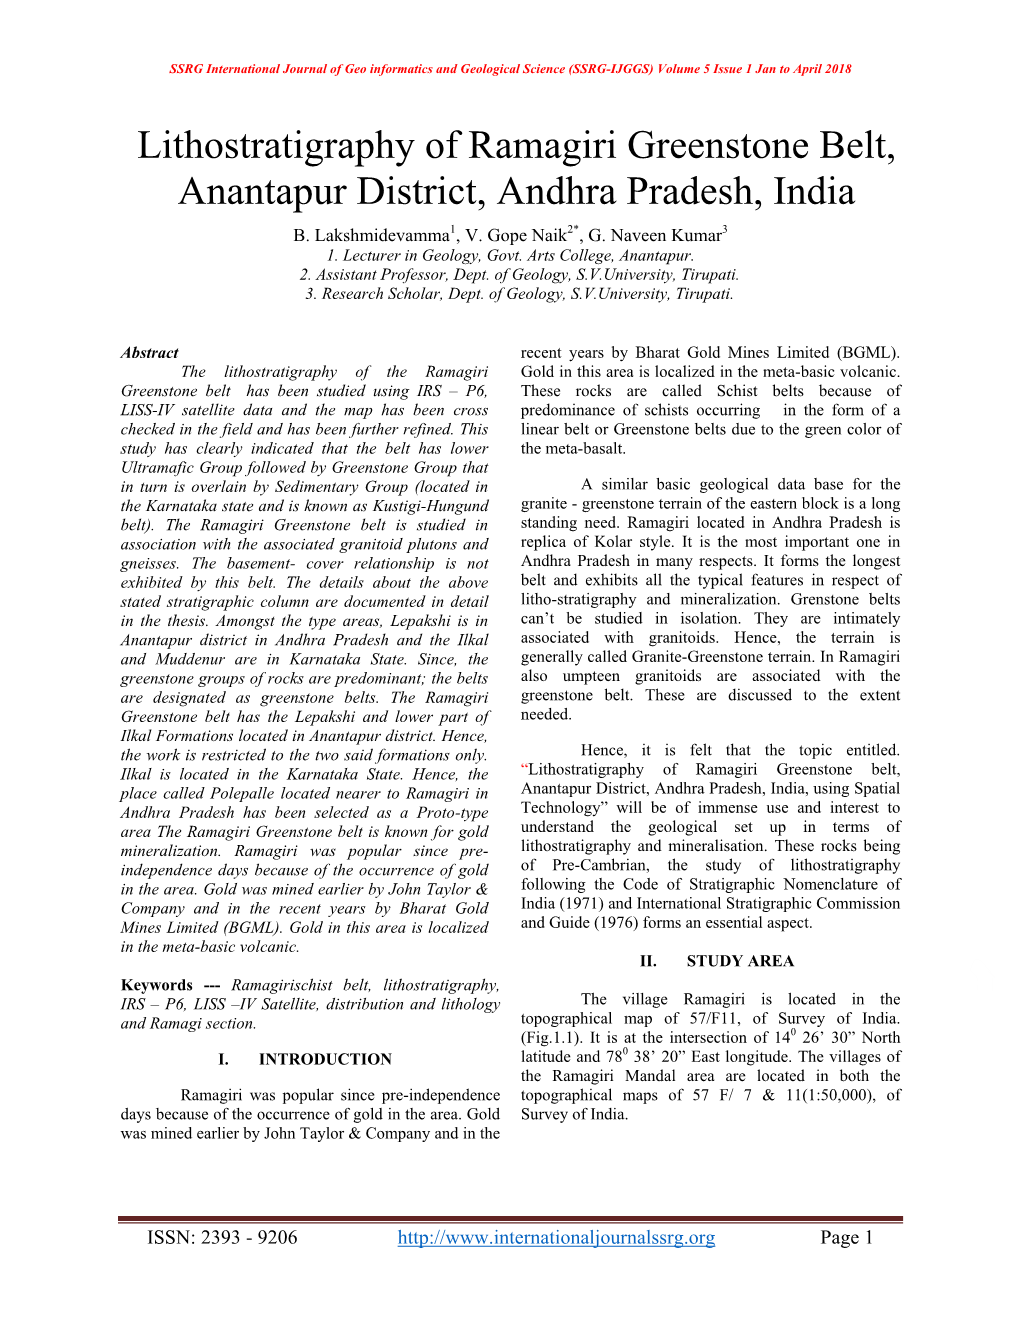 Lithostratigraphy of Ramagiri Greenstone Belt, Anantapur District, Andhra Pradesh, India